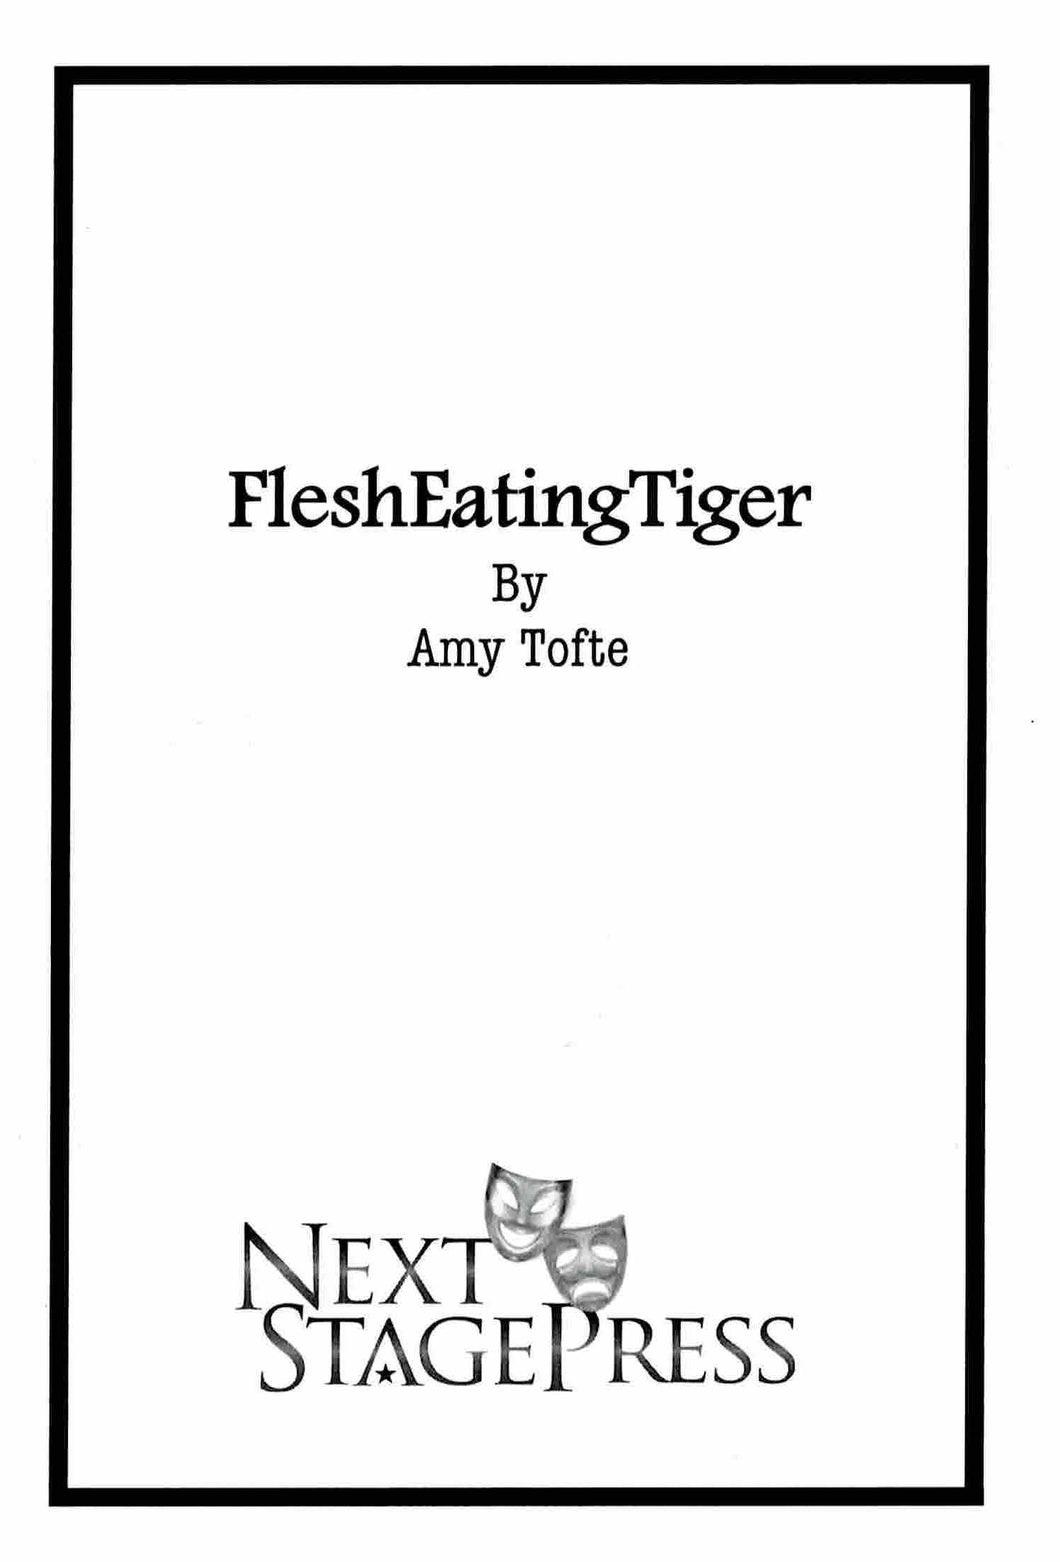 FleshEatingTiger by Amy Tofte